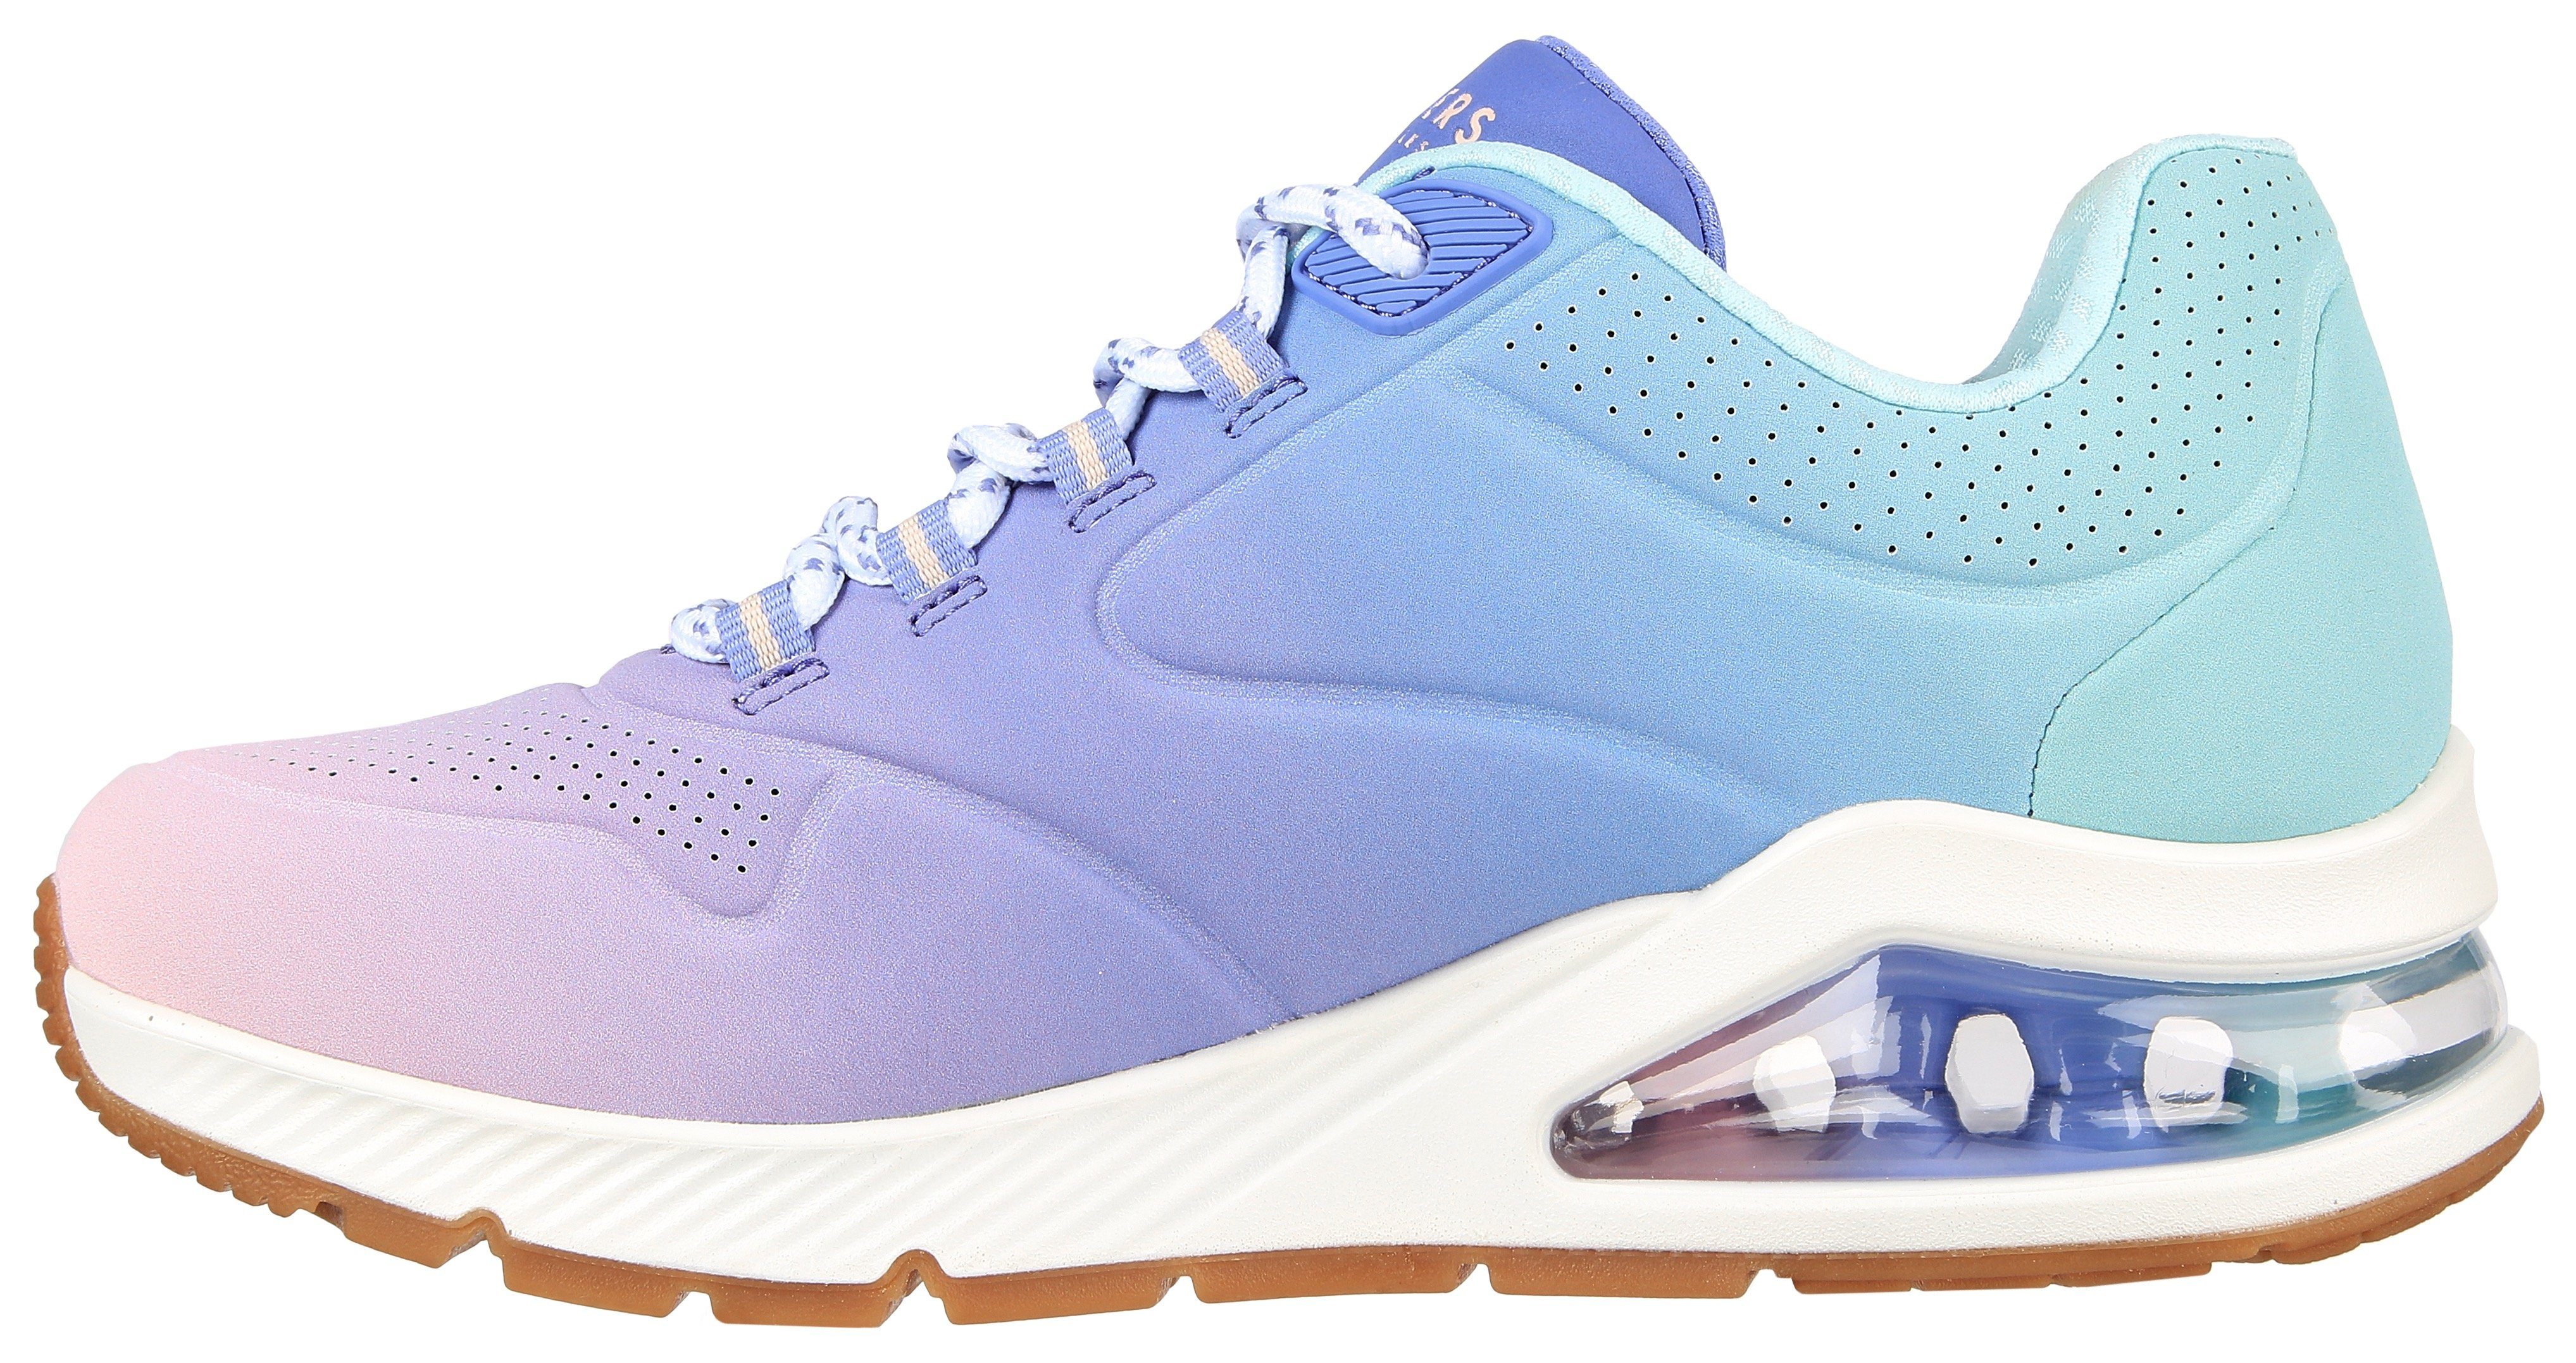 Sneaker UNO Farbkombi Skechers 2 kombiniert blau leuchtender AWAY OMBRE in